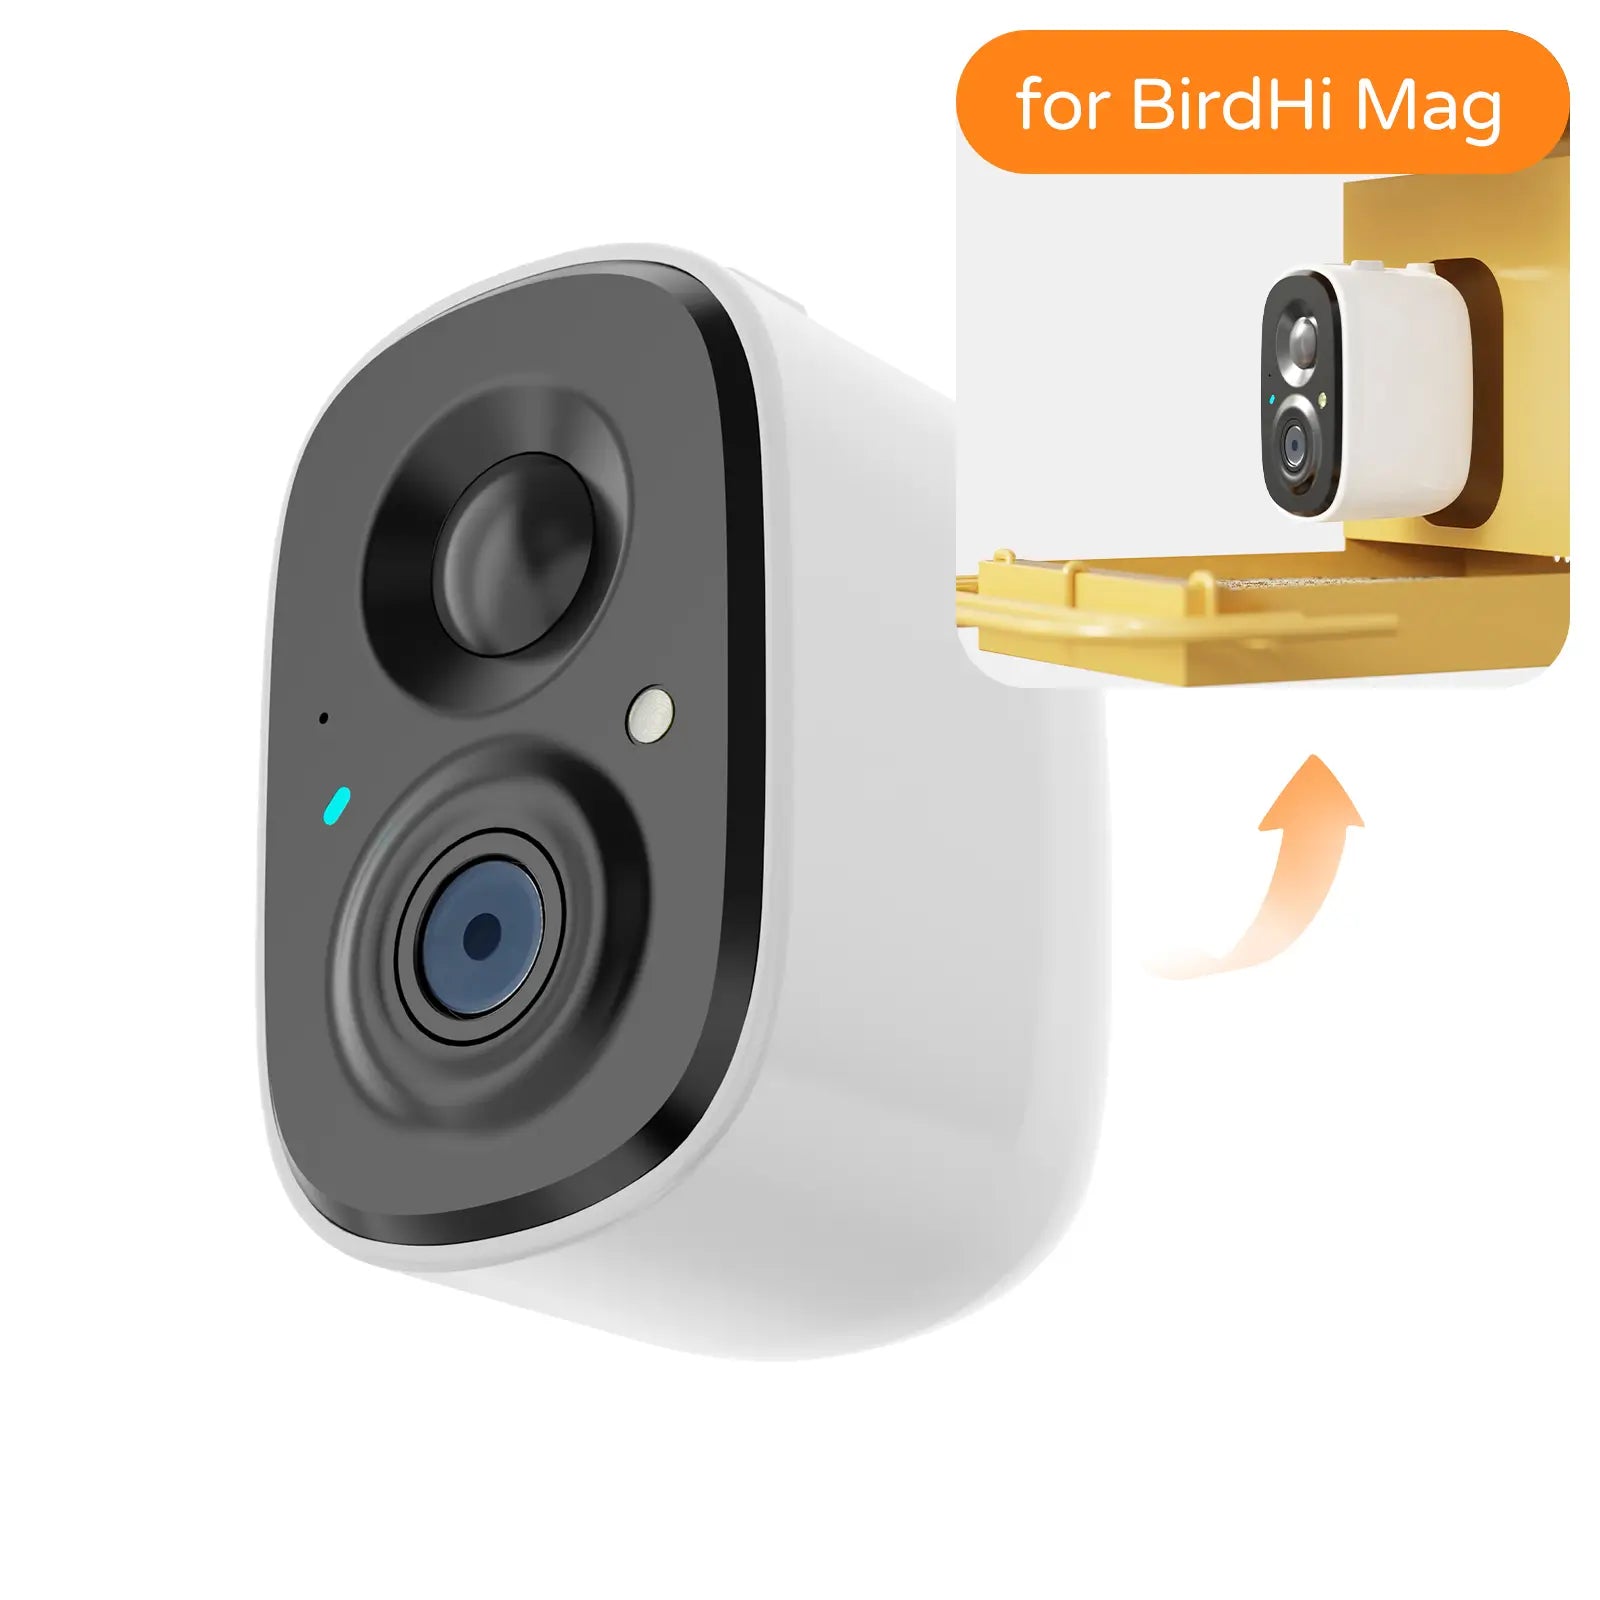 Bilantan bird feeder Smart Bird Camera for BirdHi Mag